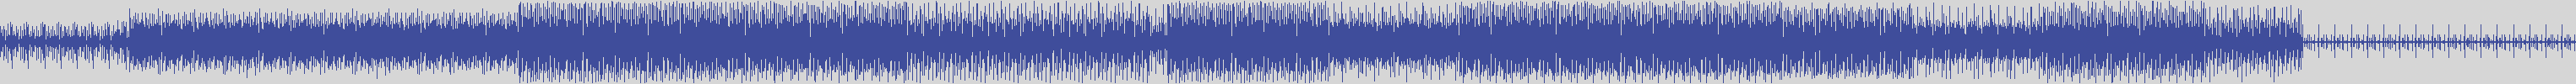 nf_boyz_records [NFY015] Don Carter - Novac [Extended Mix] audio wave form